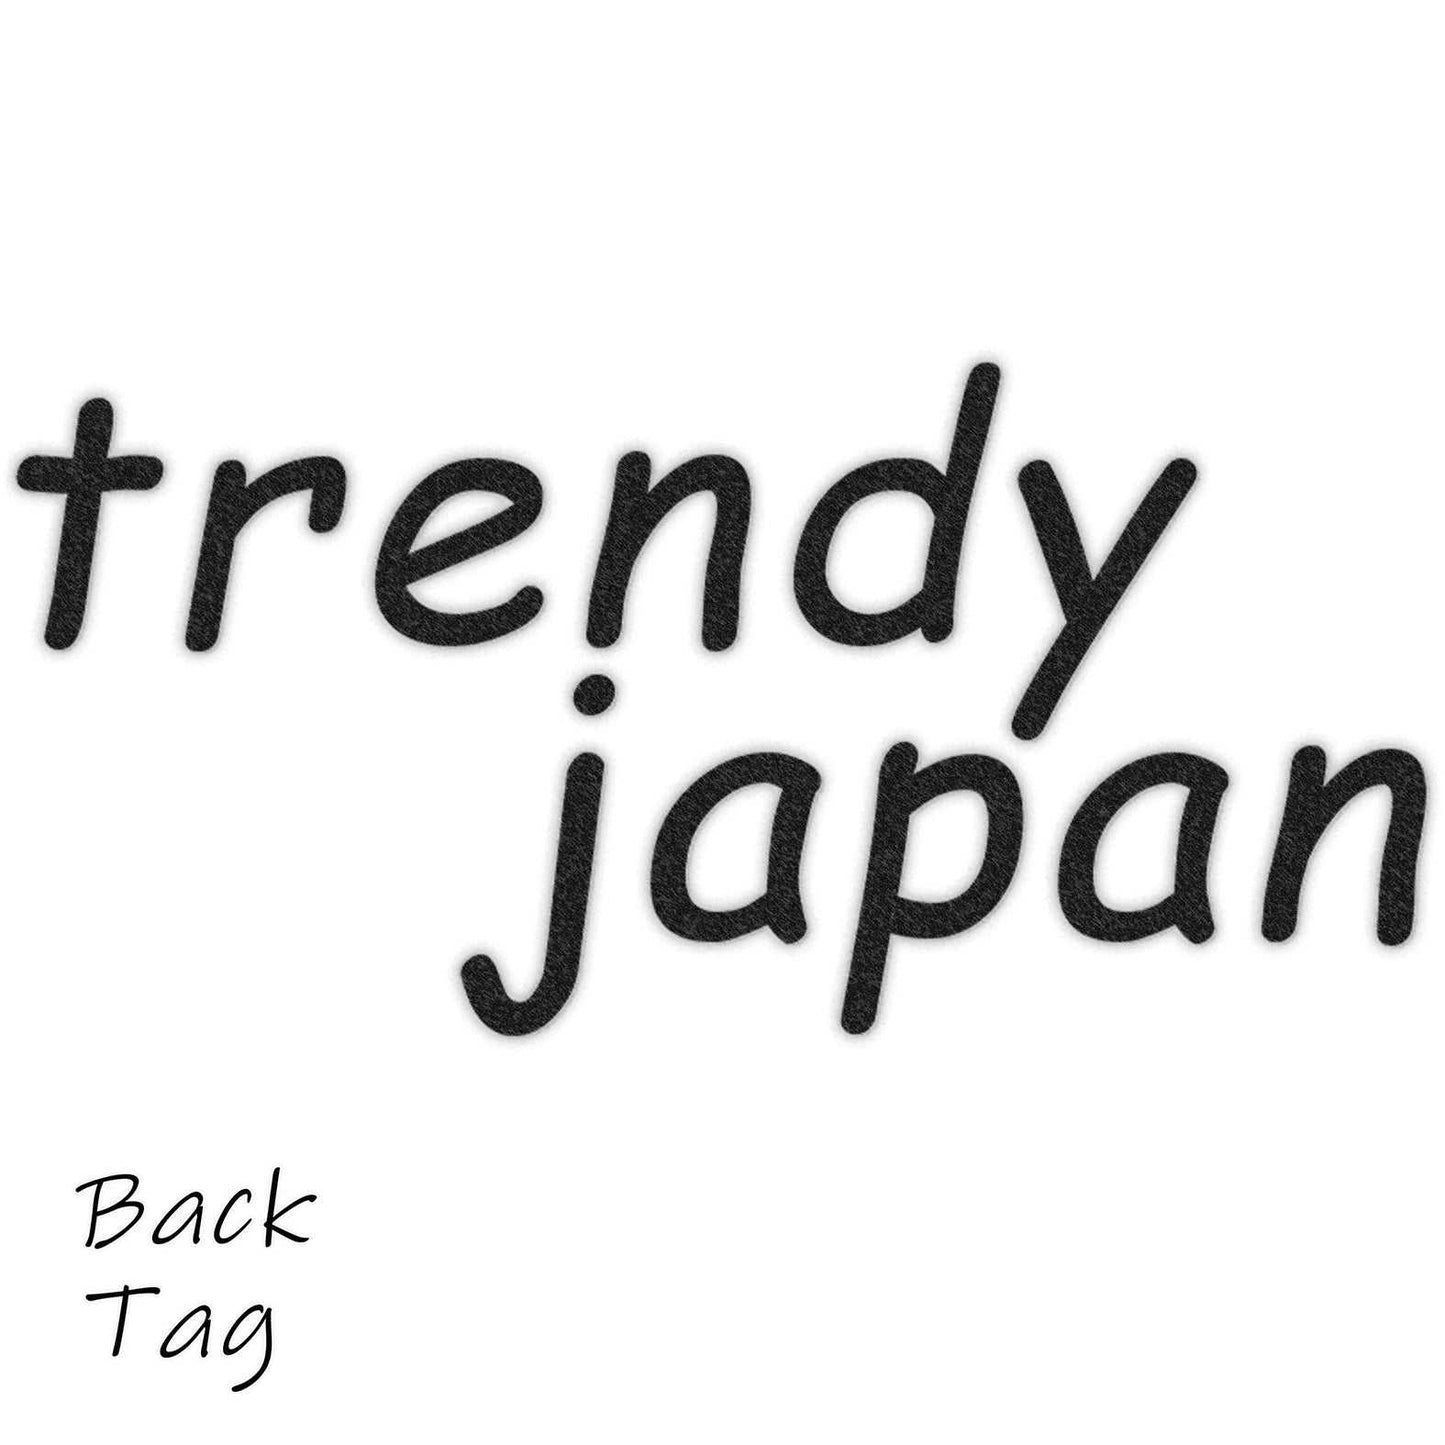 East Asia Unisex T Busted LG | Online Clothing in Japan TRENDYJAPAN - TrendyJapan